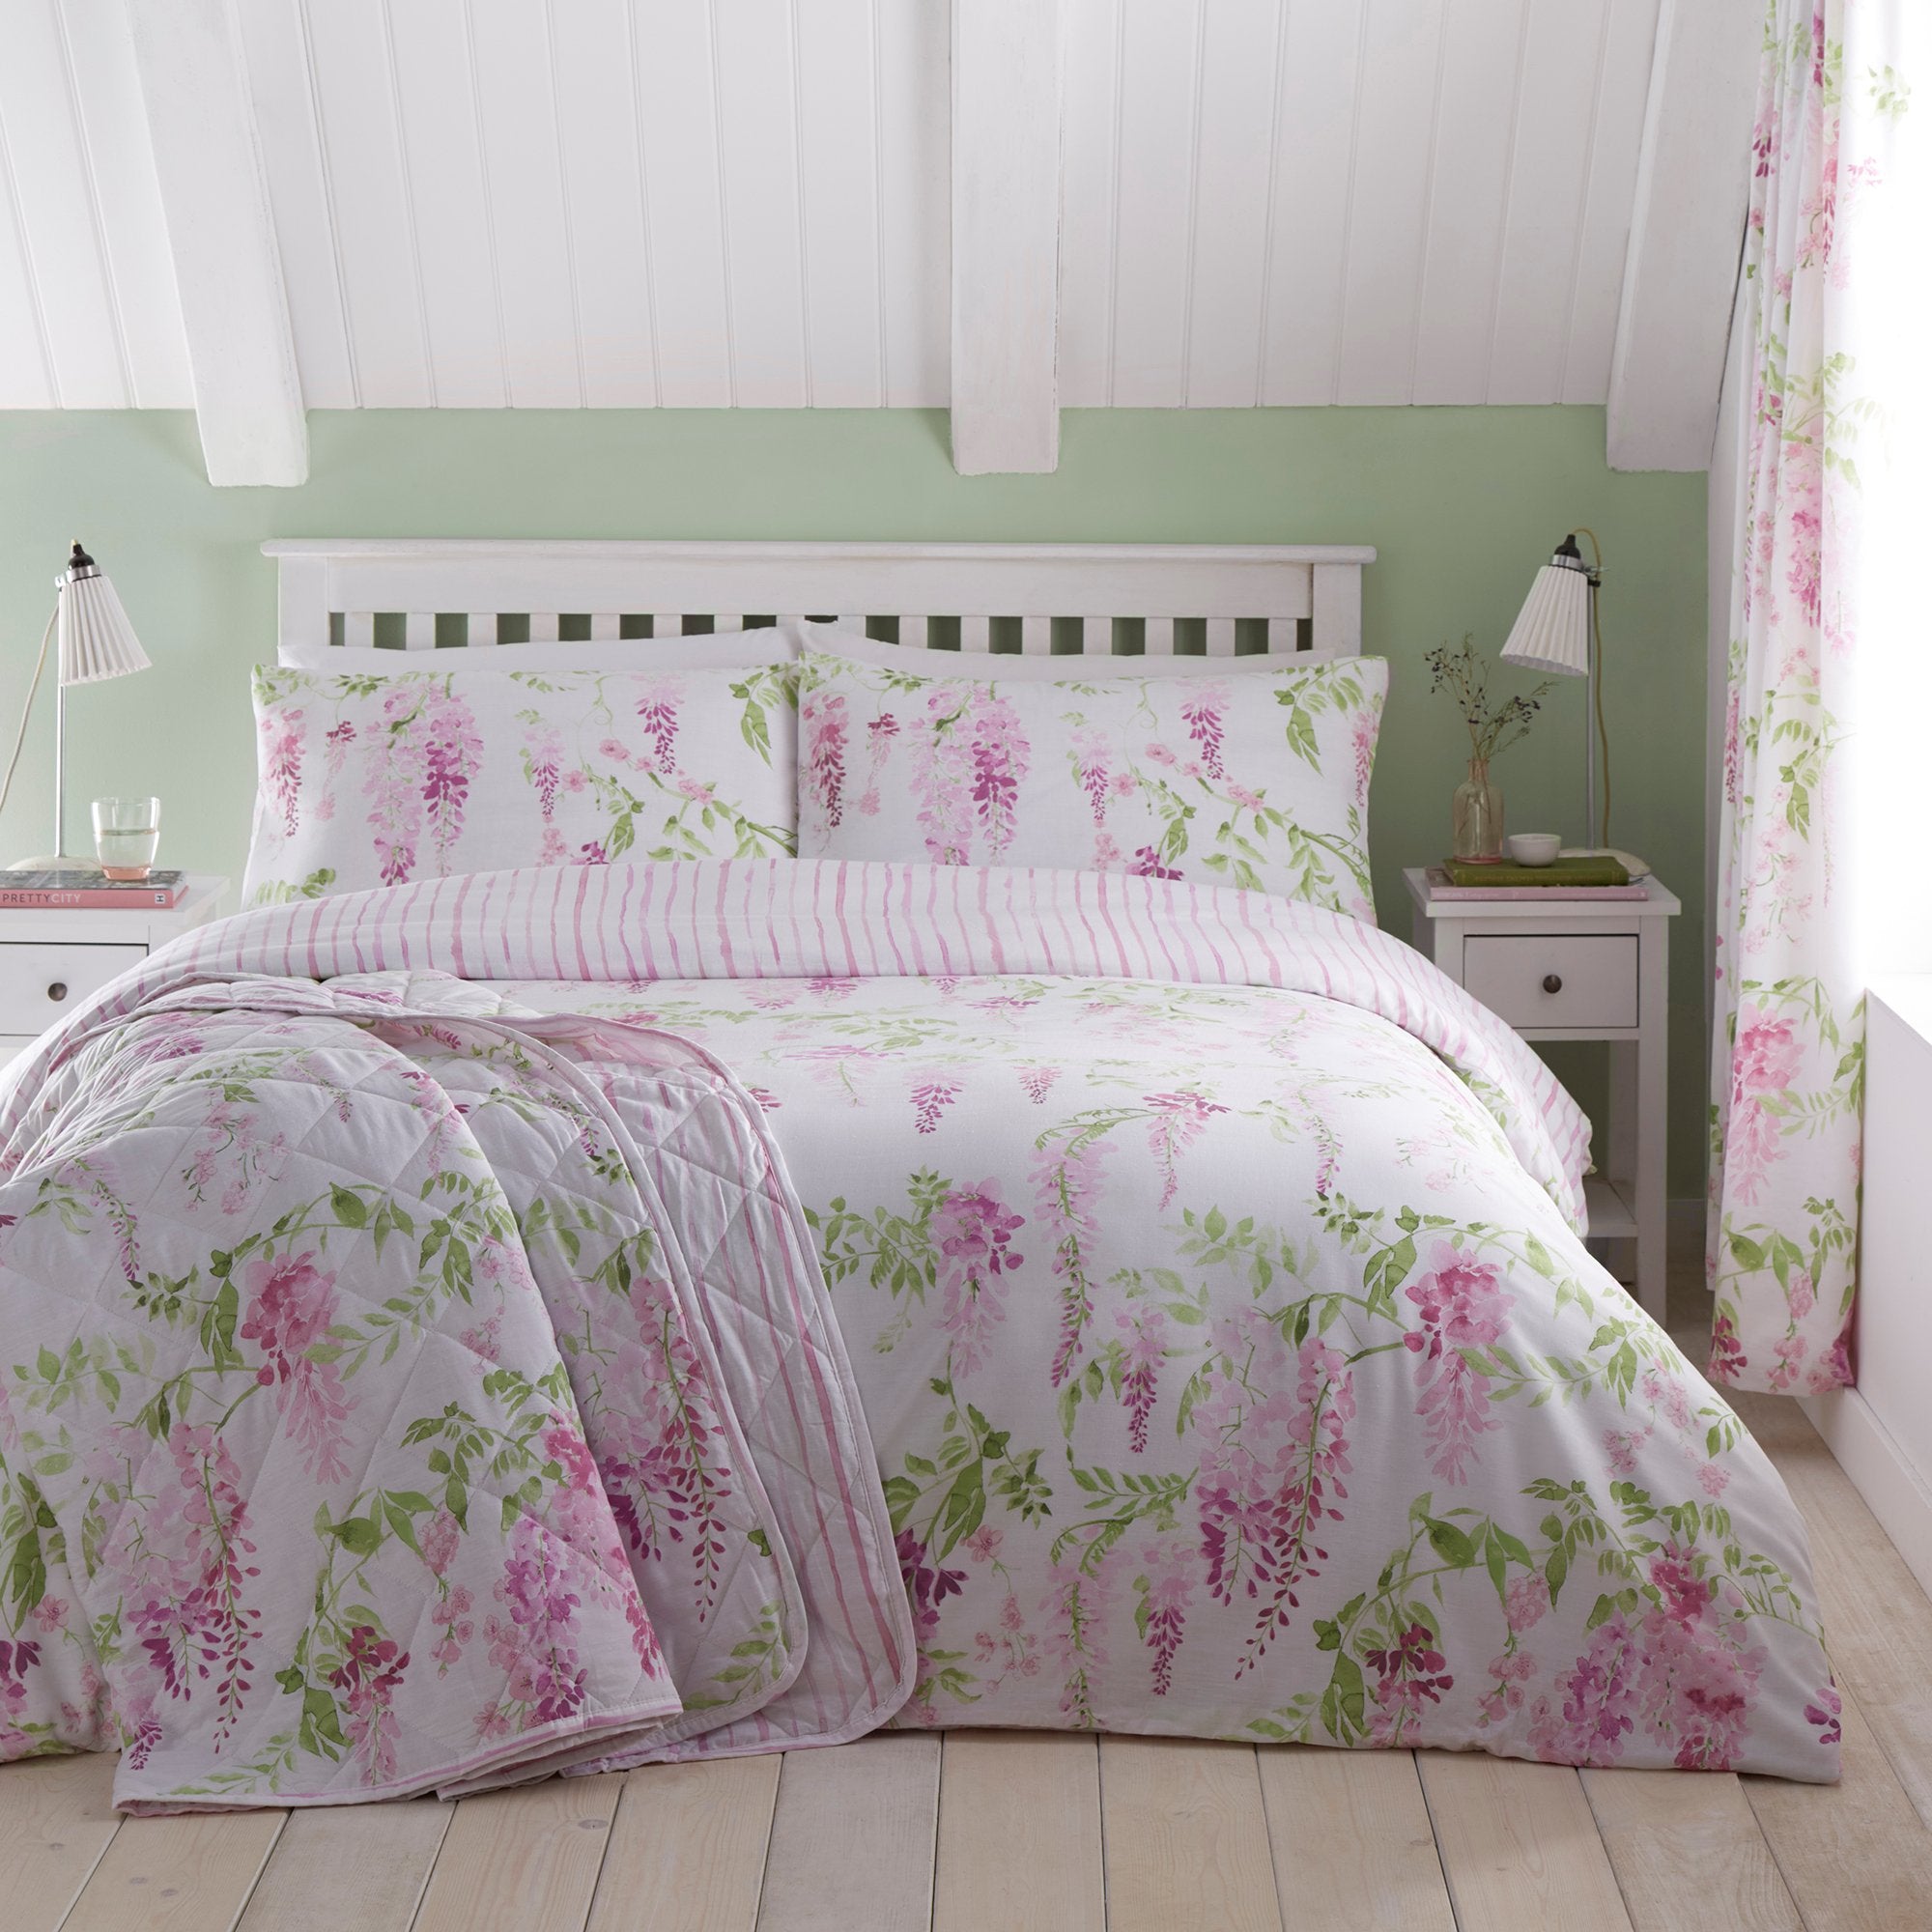 Bedspread Wisteria by Dreams & Drapes Design in Pink